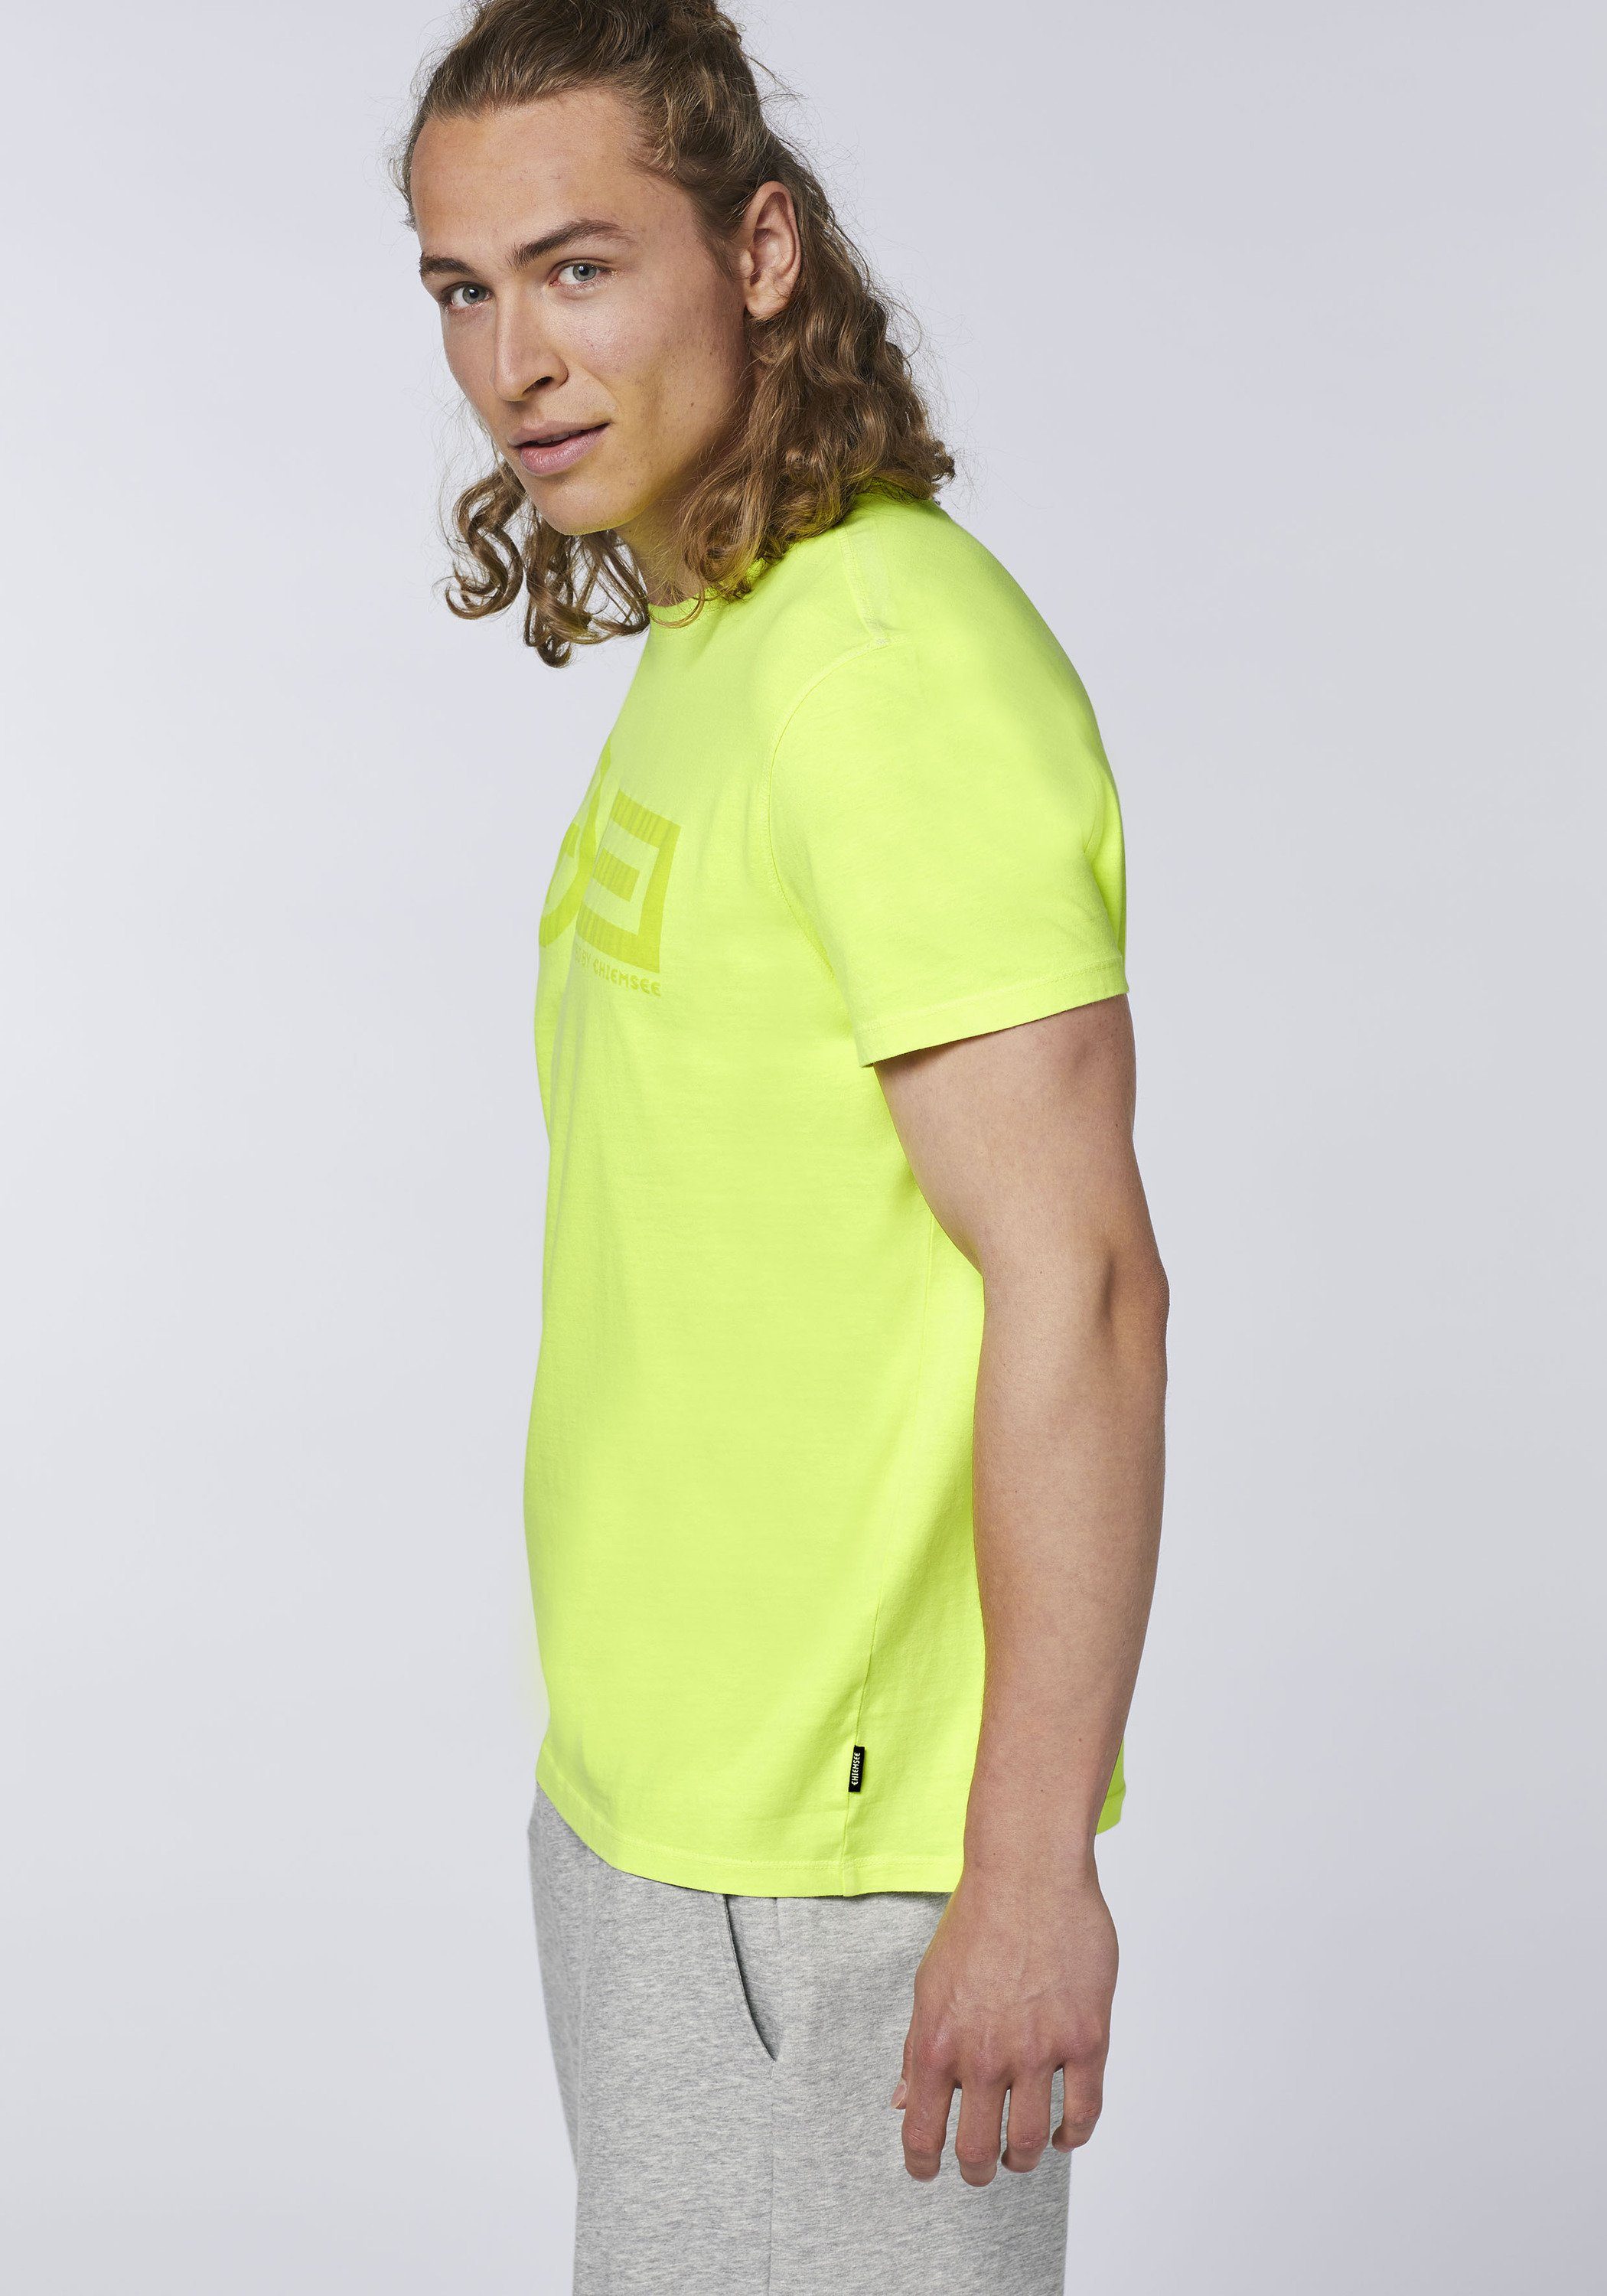 Chiemsee Print-Shirt T-Shirt 1 Frontprint Yellow mit PlusMinus Safety 13-0630